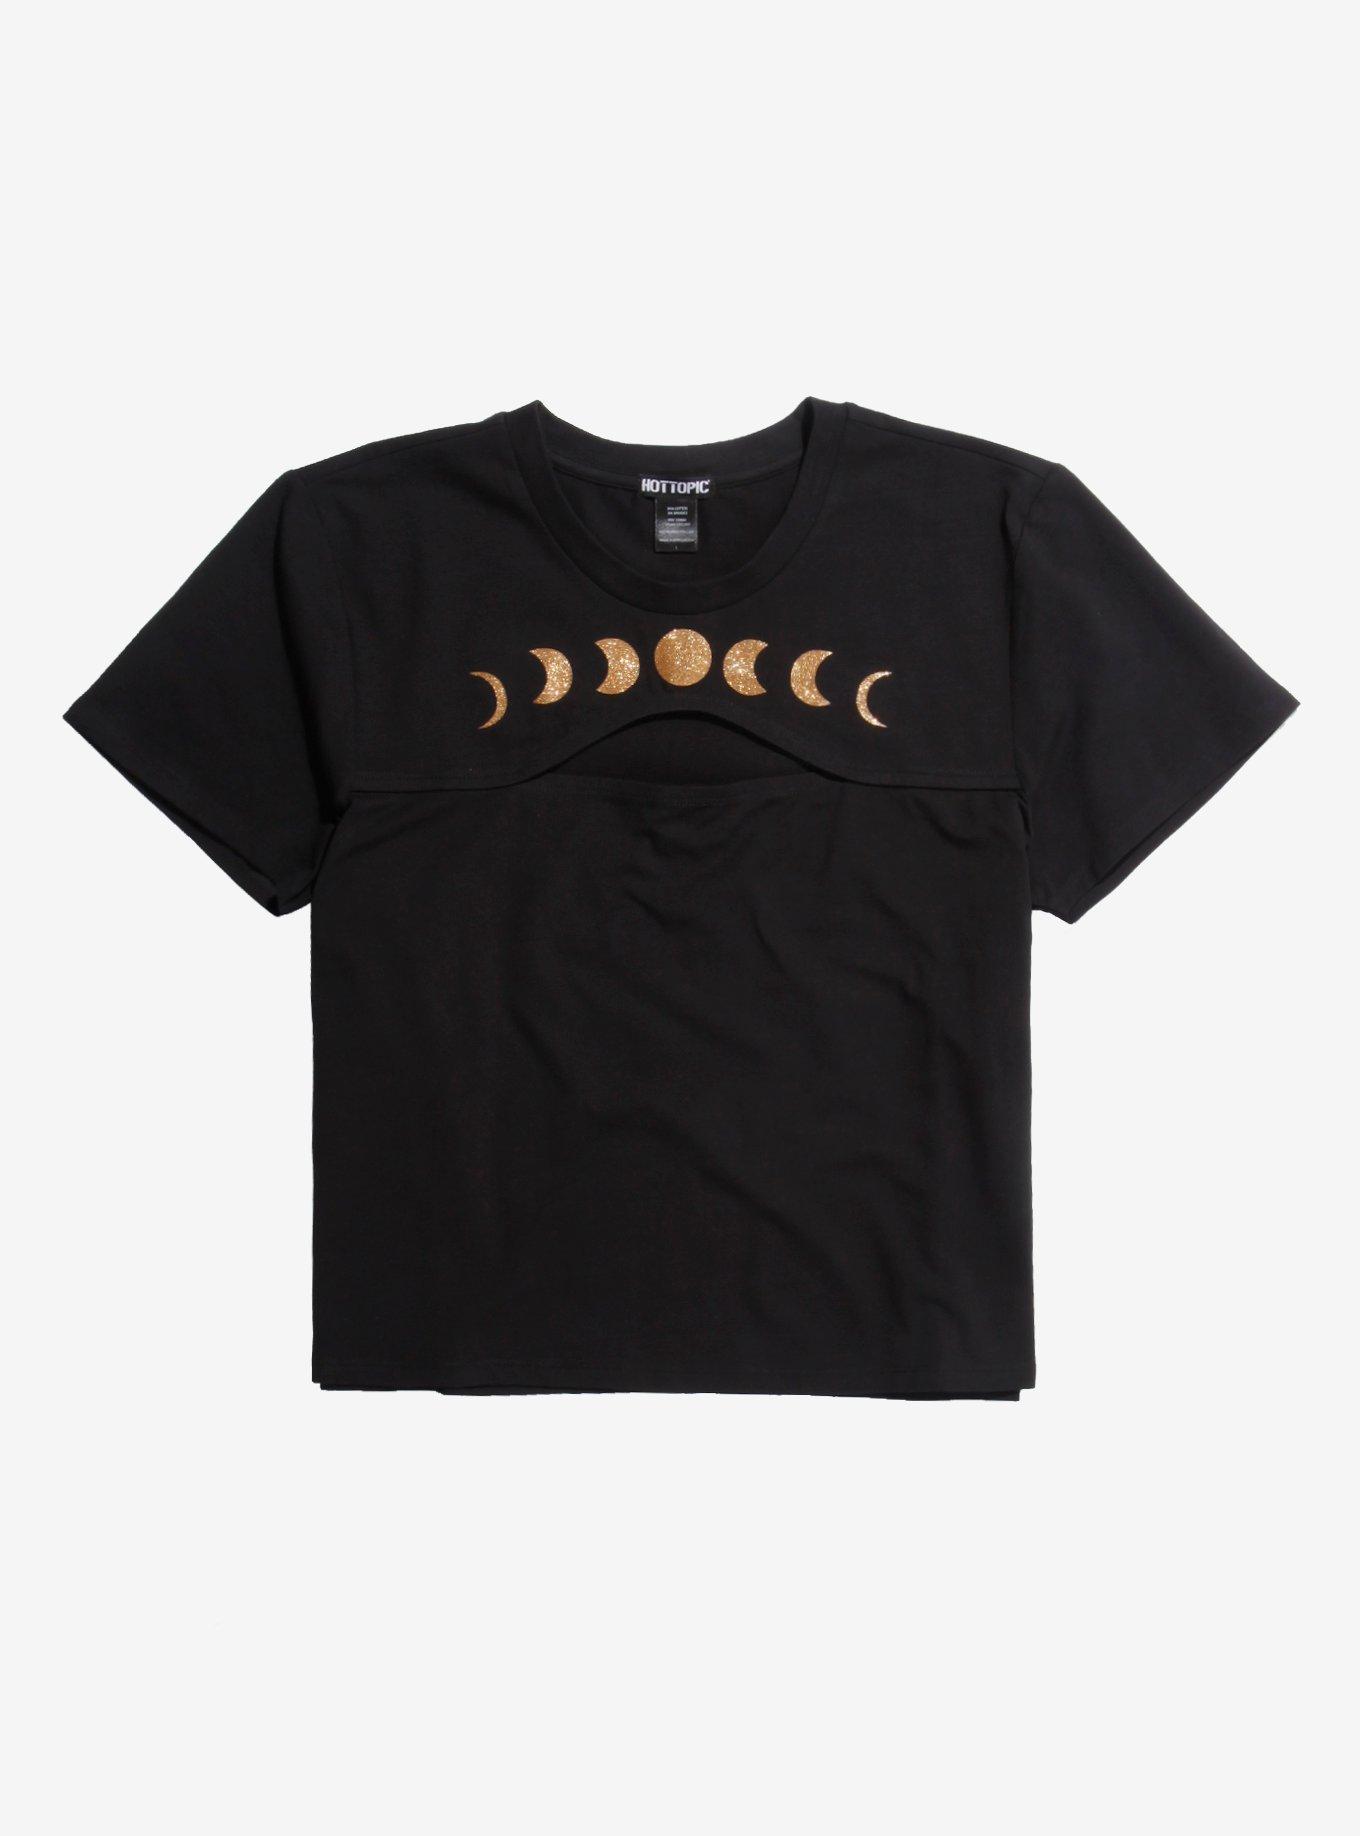 Moon Phases Cutout Girls Crop T-Shirt Plus Size, MULTI, hi-res